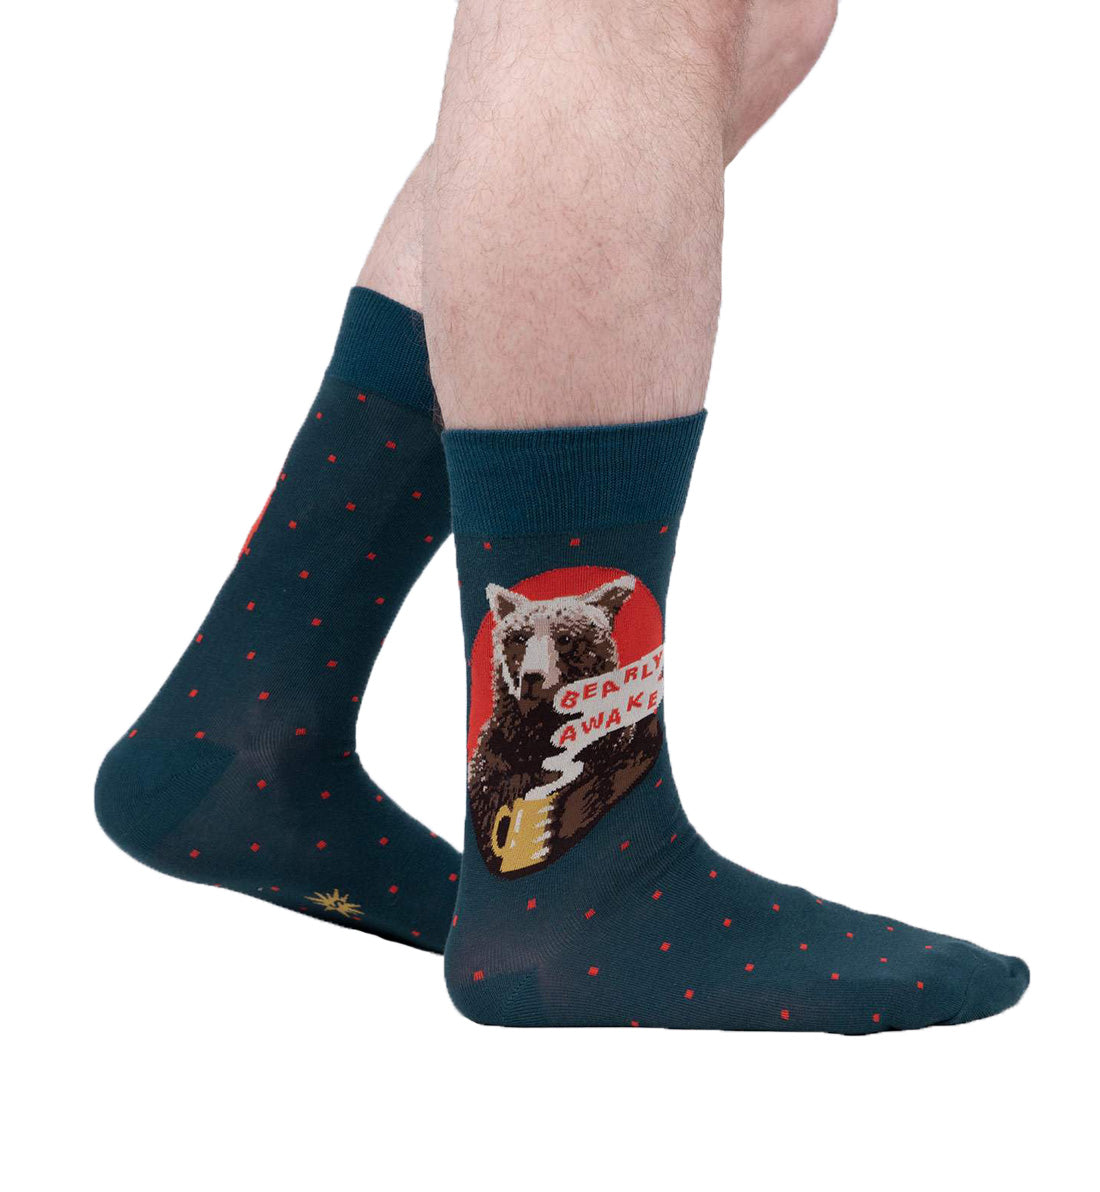 SOCK it to me Men's Crew Socks (mef0466),Bearly Awake - Bearly Awake,One Size